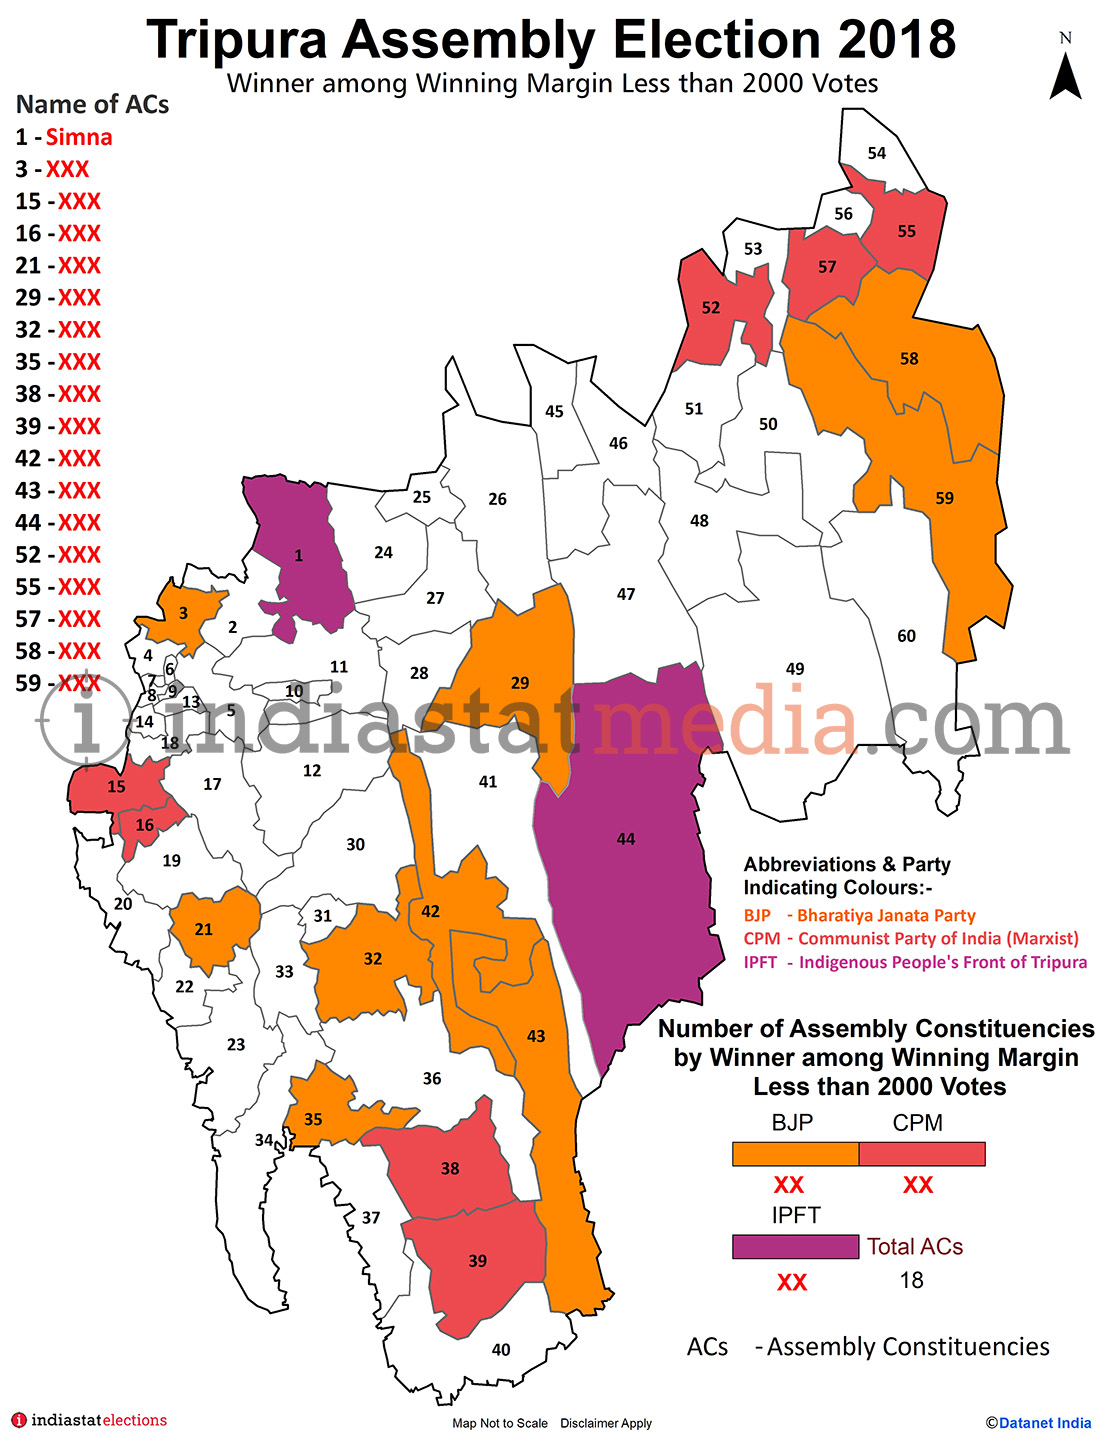 Winner among Winning Margin Less than 2000 Votes in Tripura (Assembly Election - 2018)